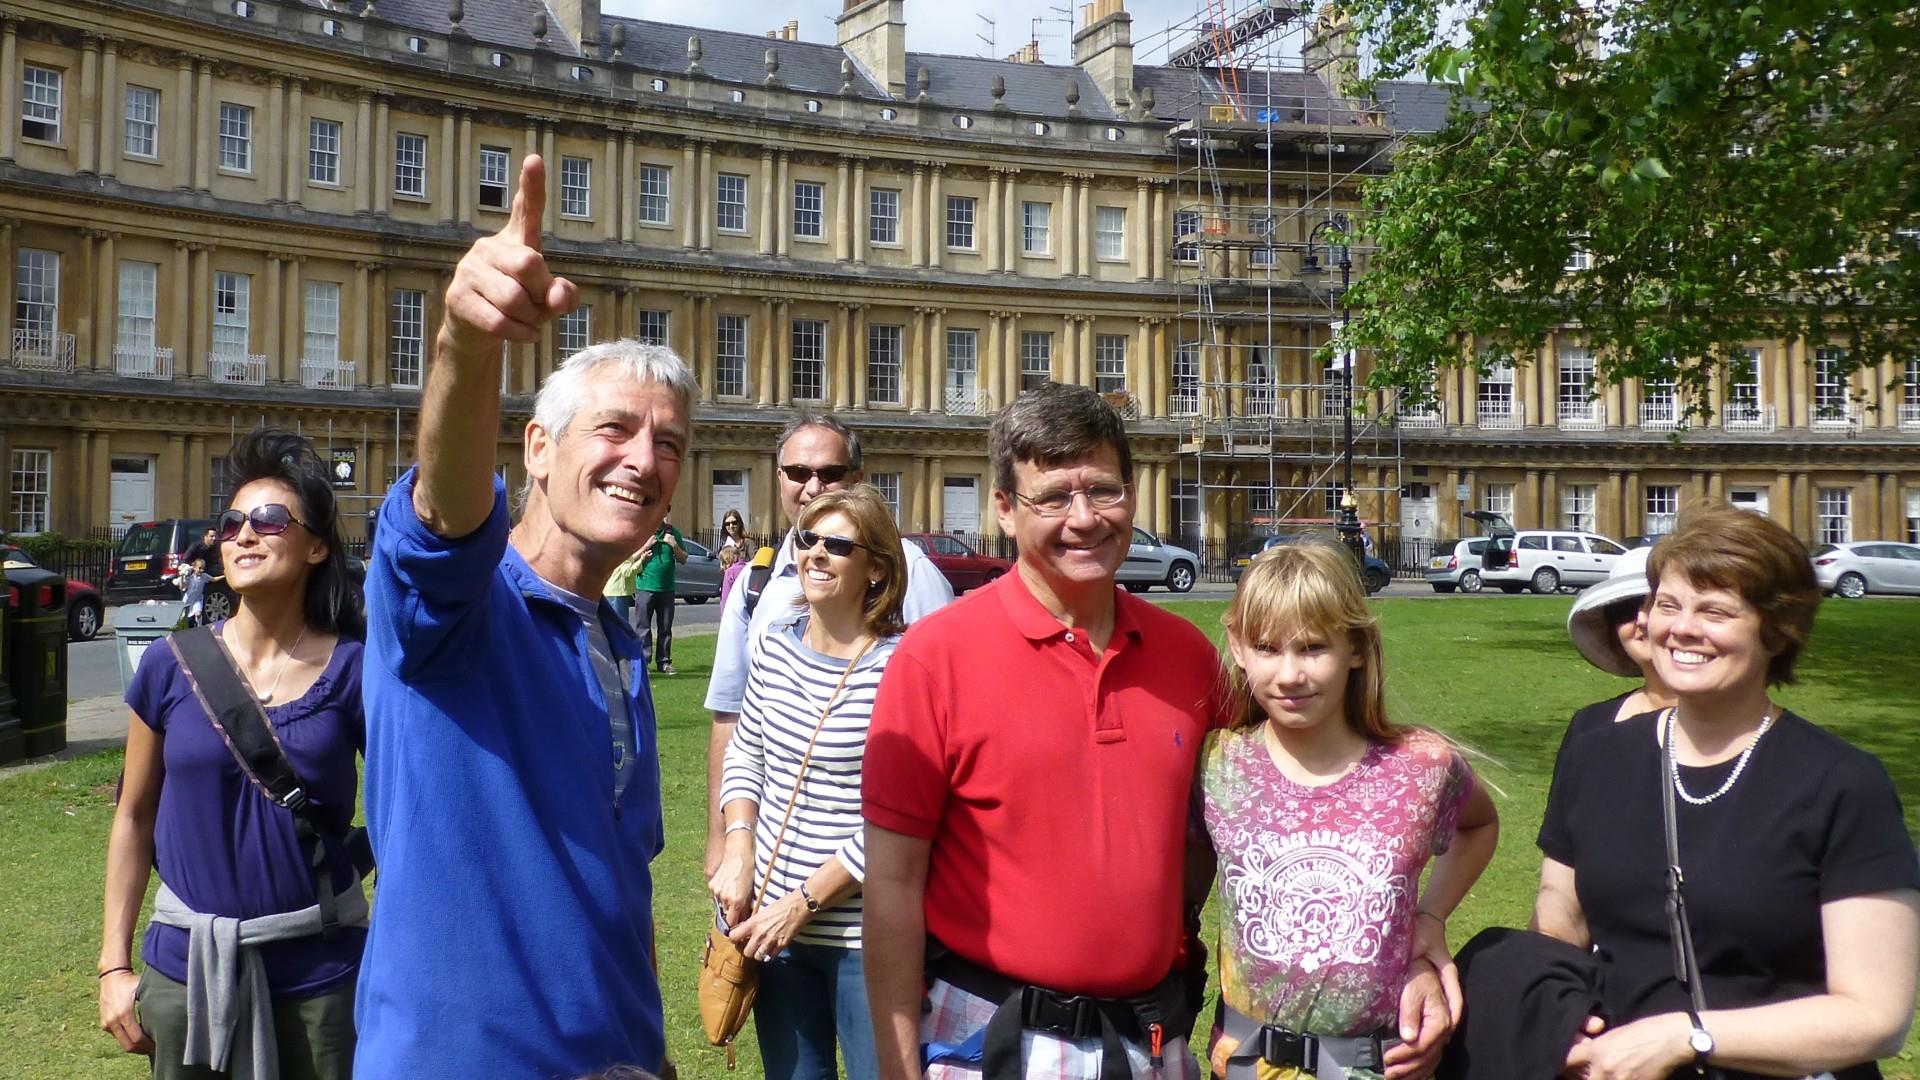 Group enjoy a tour of Bath